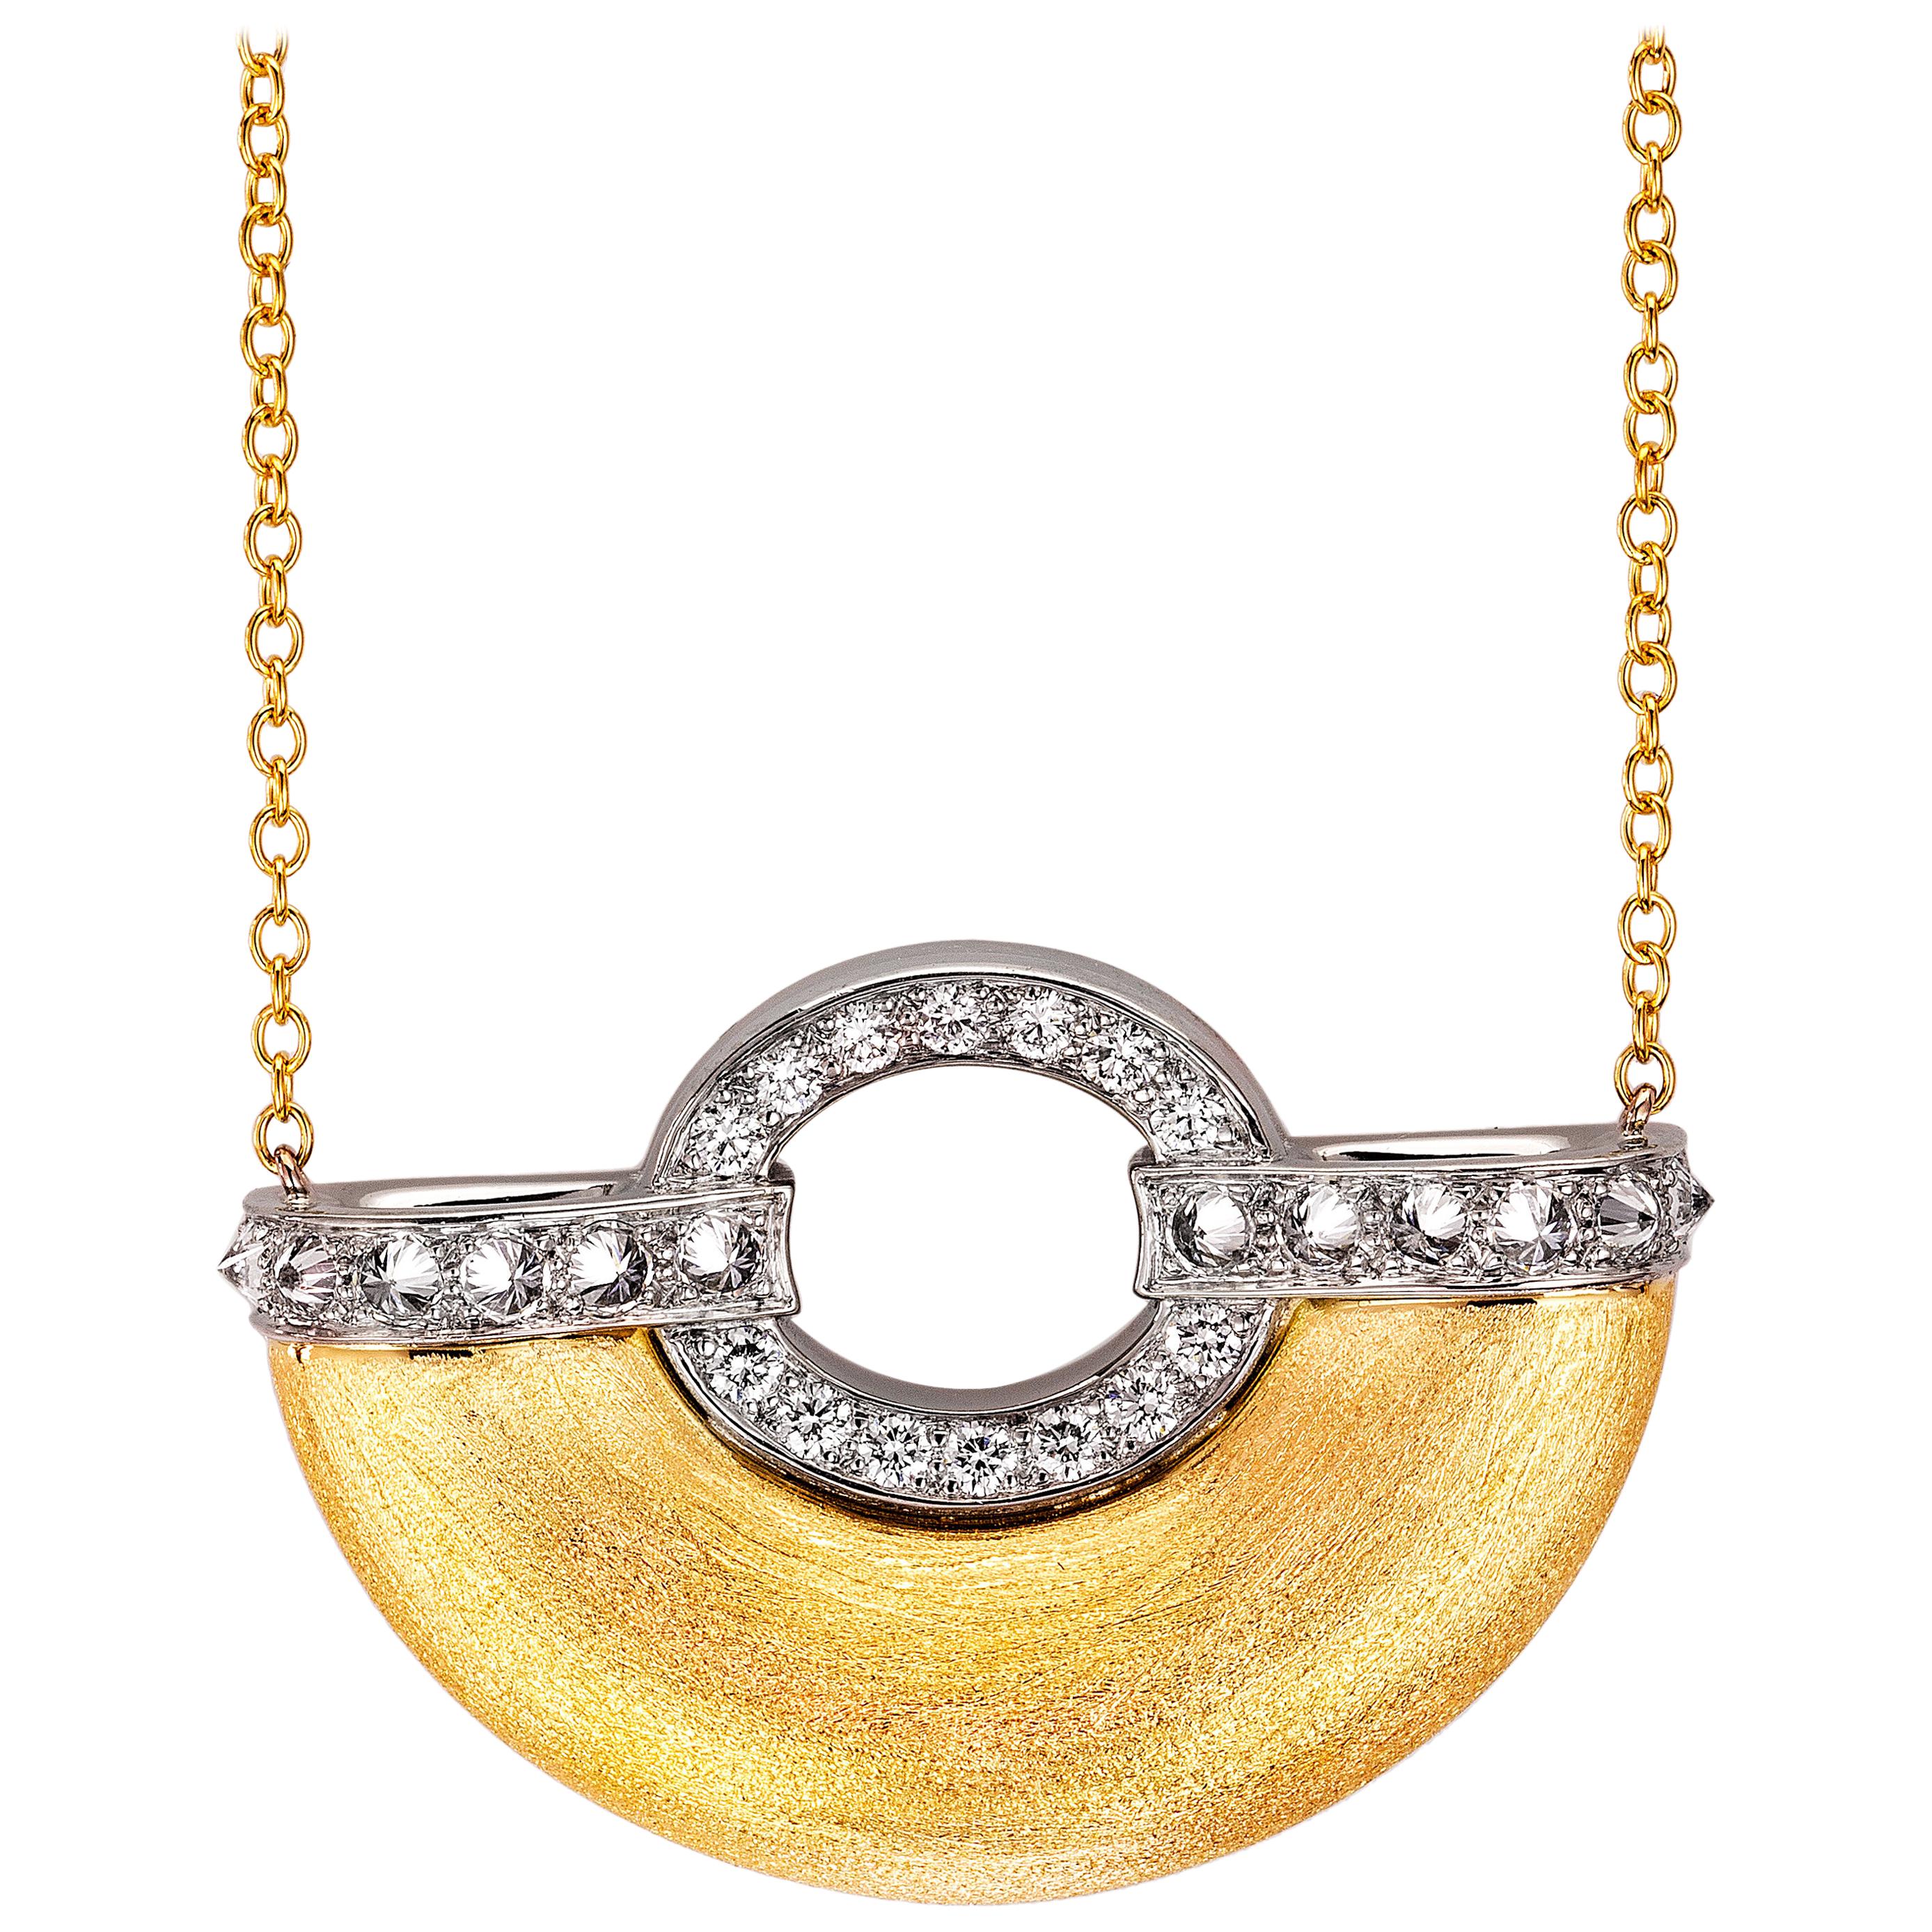 AnaKatarina 18k Yellow Gold, Palladium, Diamonds 'Girl From Ipanema' Necklace For Sale